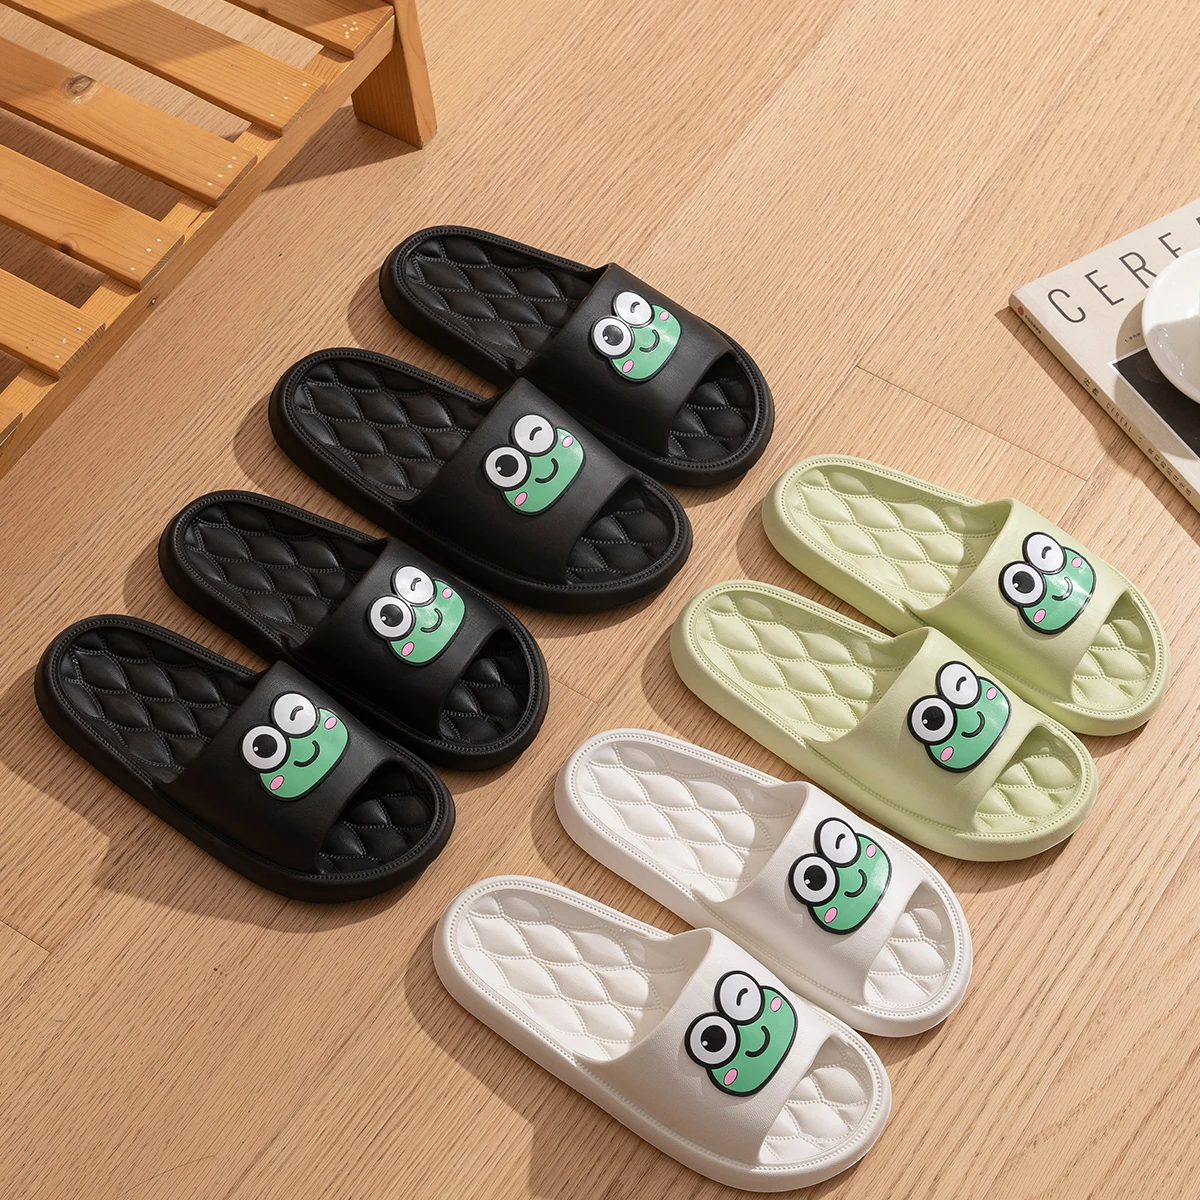 Zapatillas de rana para mujer, sandalias de baño antideslizantes, versión coreana del hogar, cruzadas, Verano